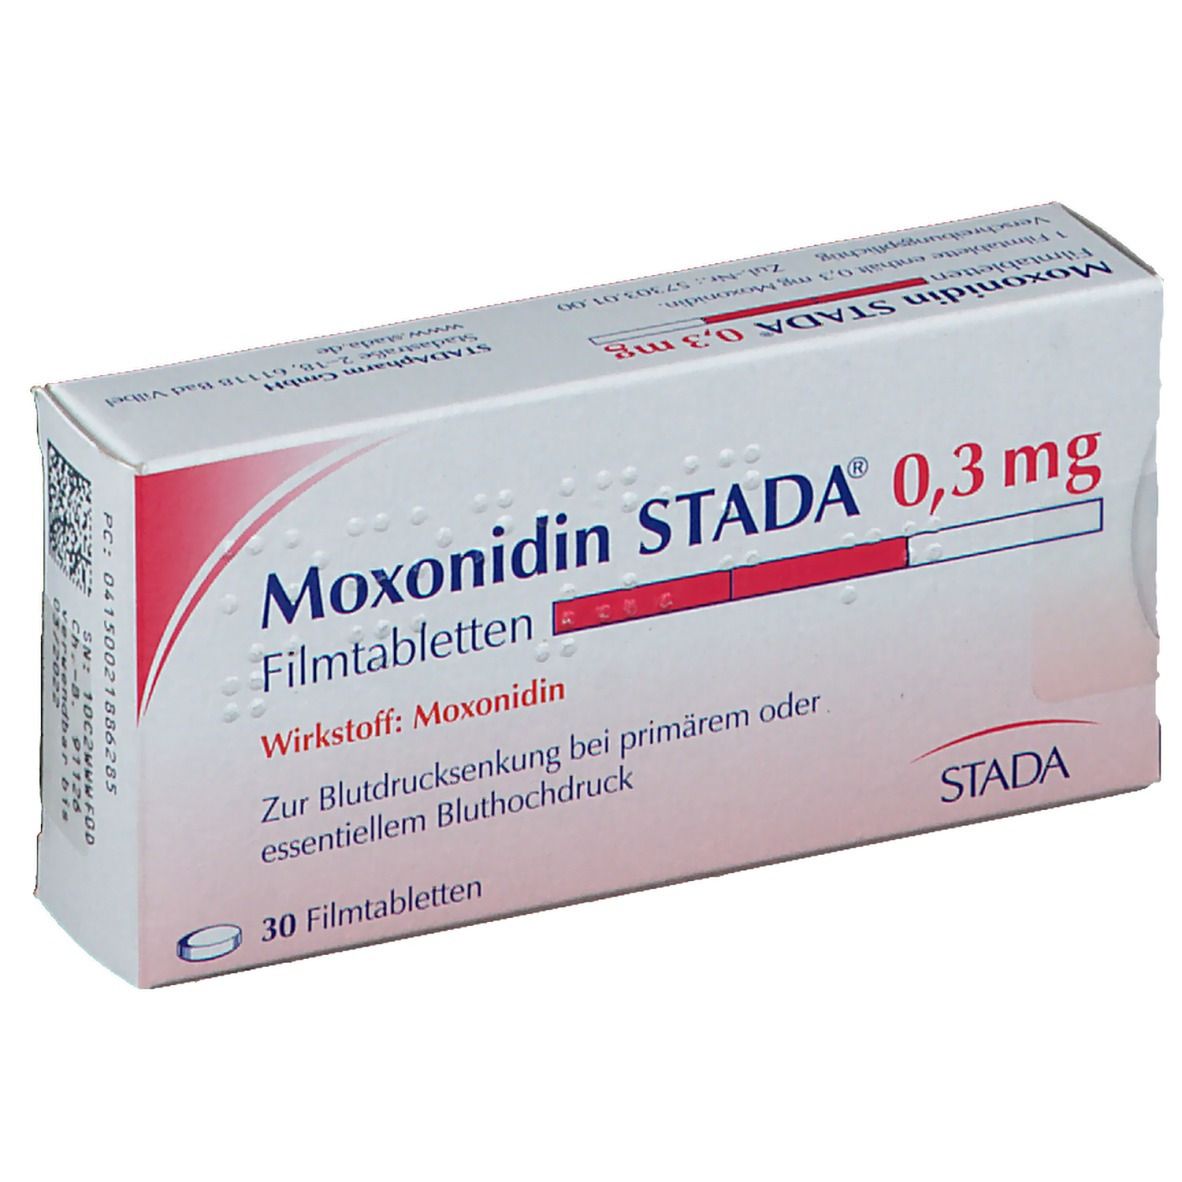 Moxonidin STADA® 0,3 mg